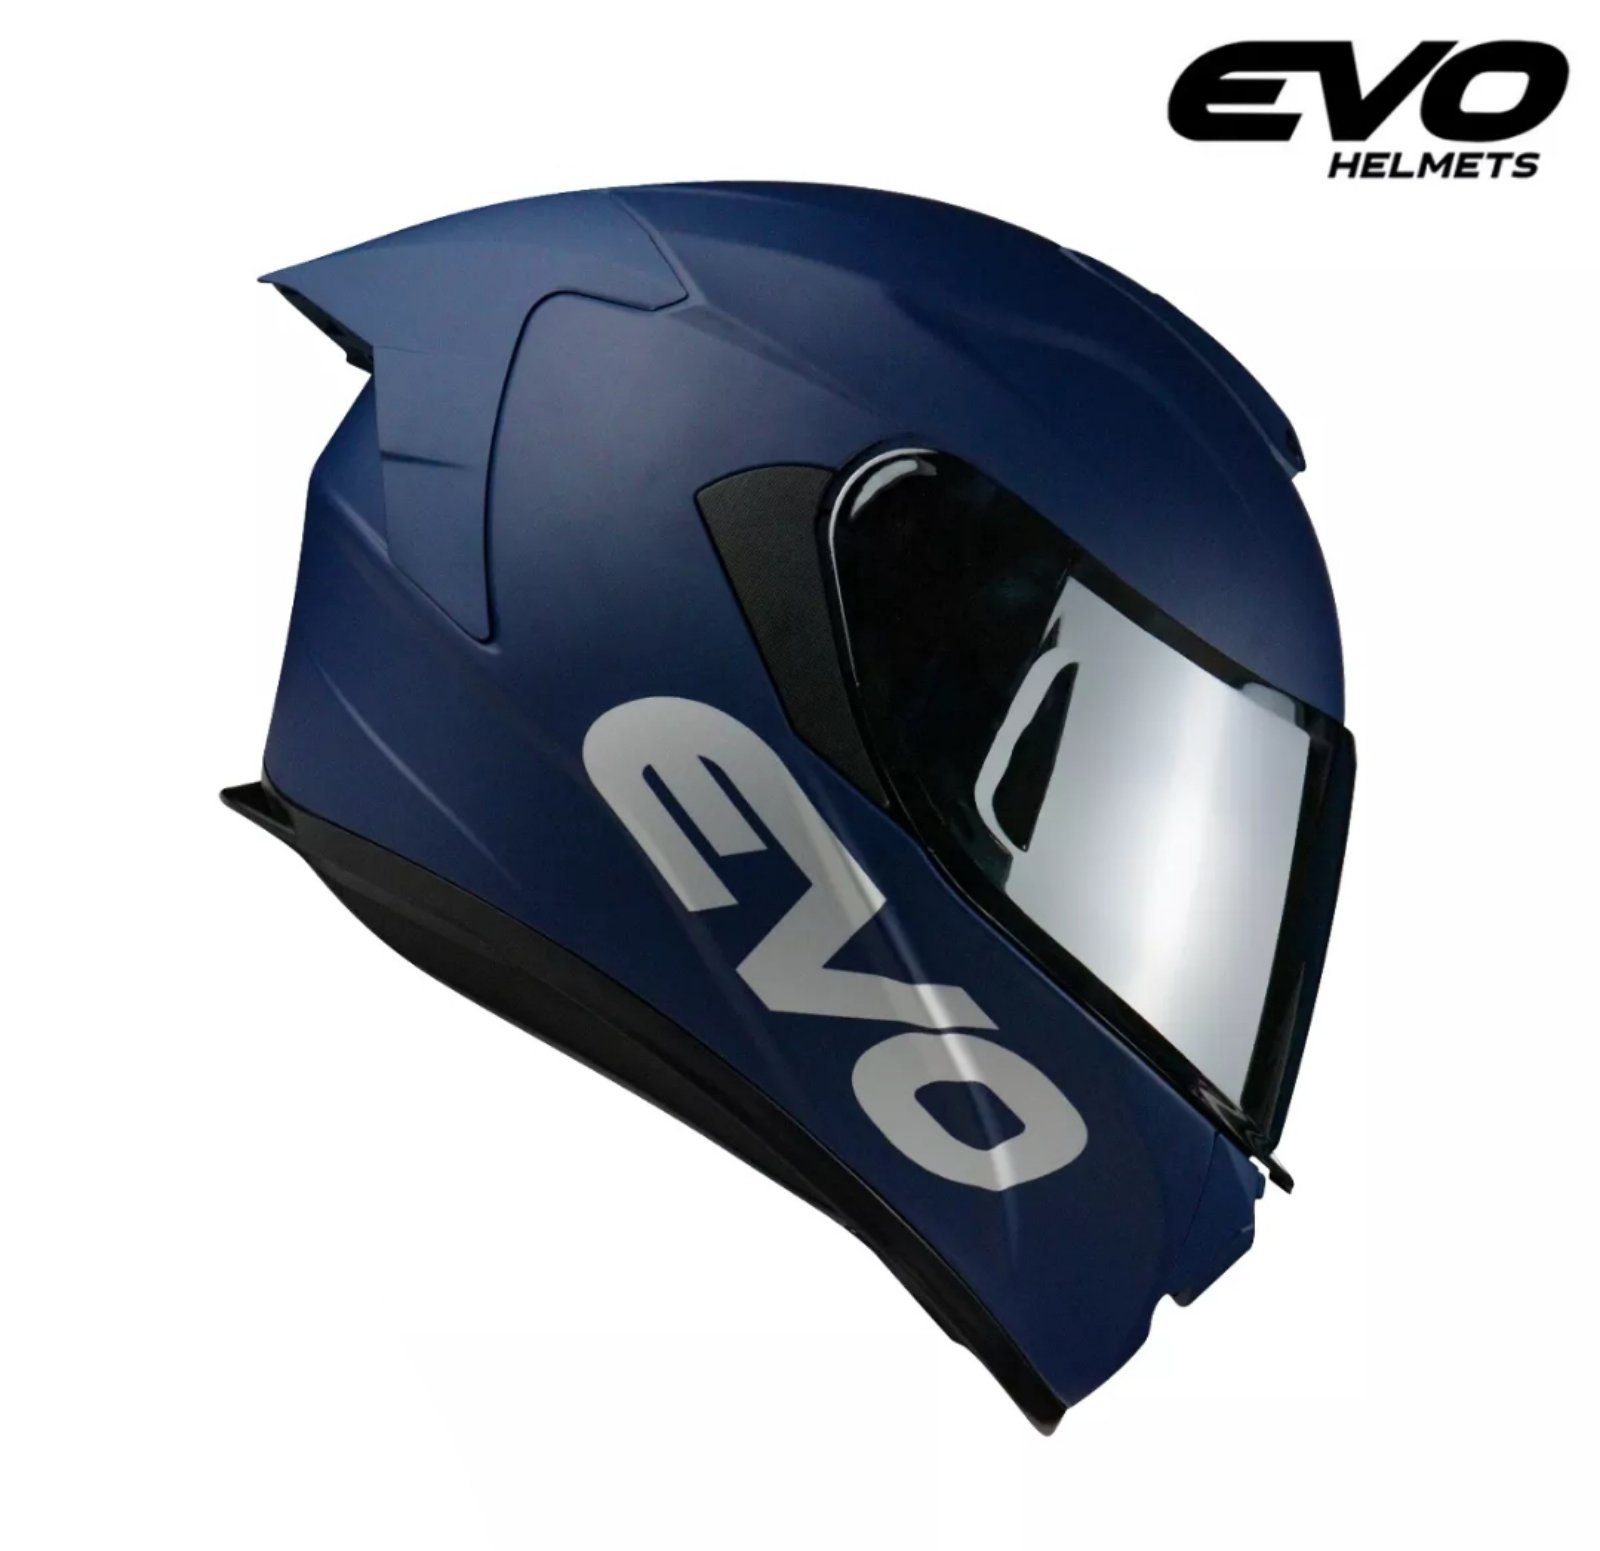 Evo Dx 7 Helmet Shop Evo Dx 7 Helmet With Great Discounts And Prices Online Lazada Philippines